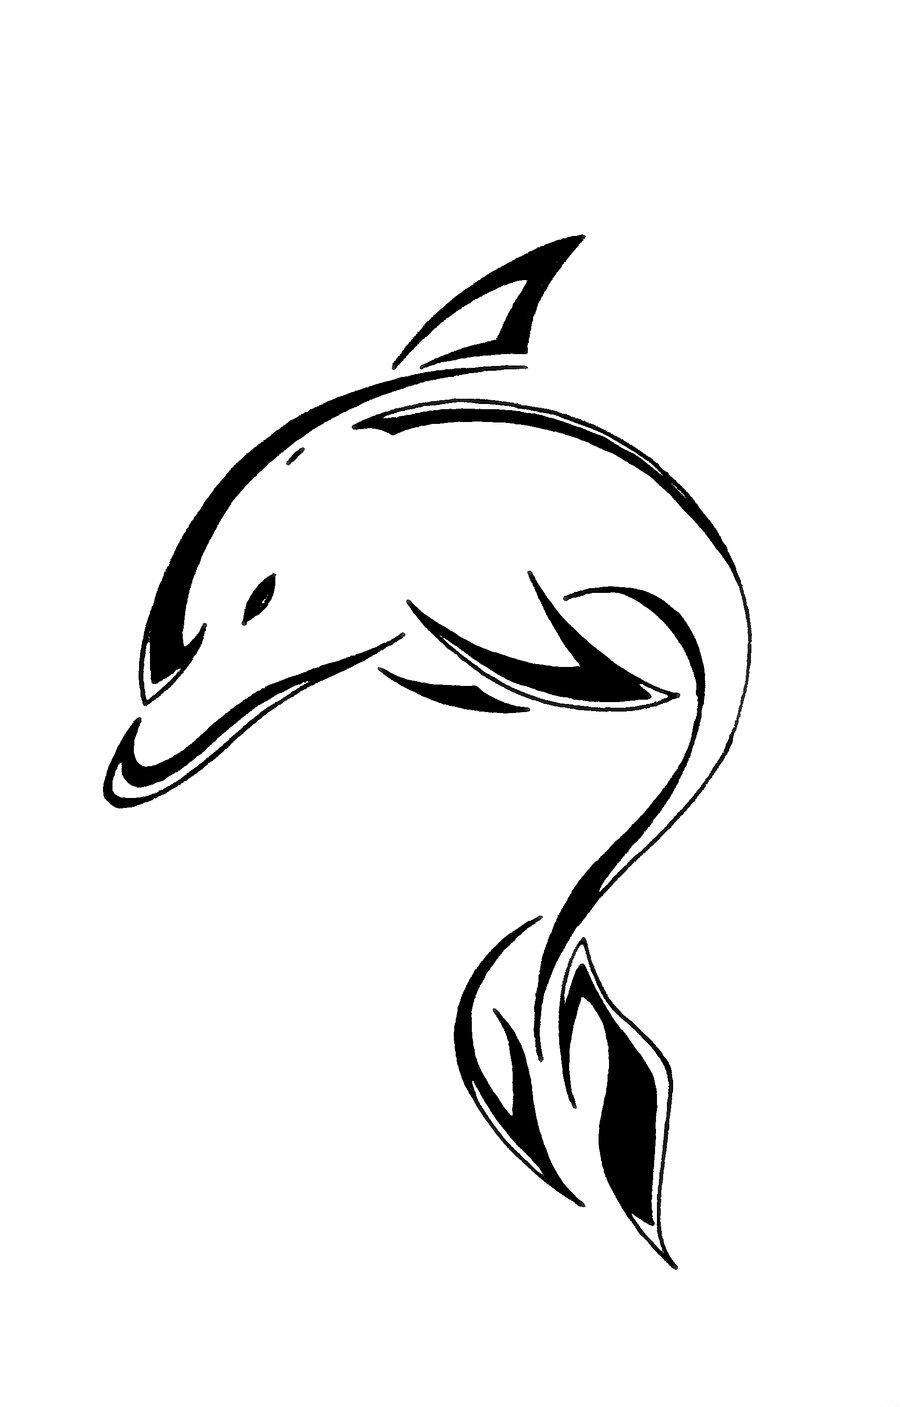 Dolphin Tribal Tattoo Design